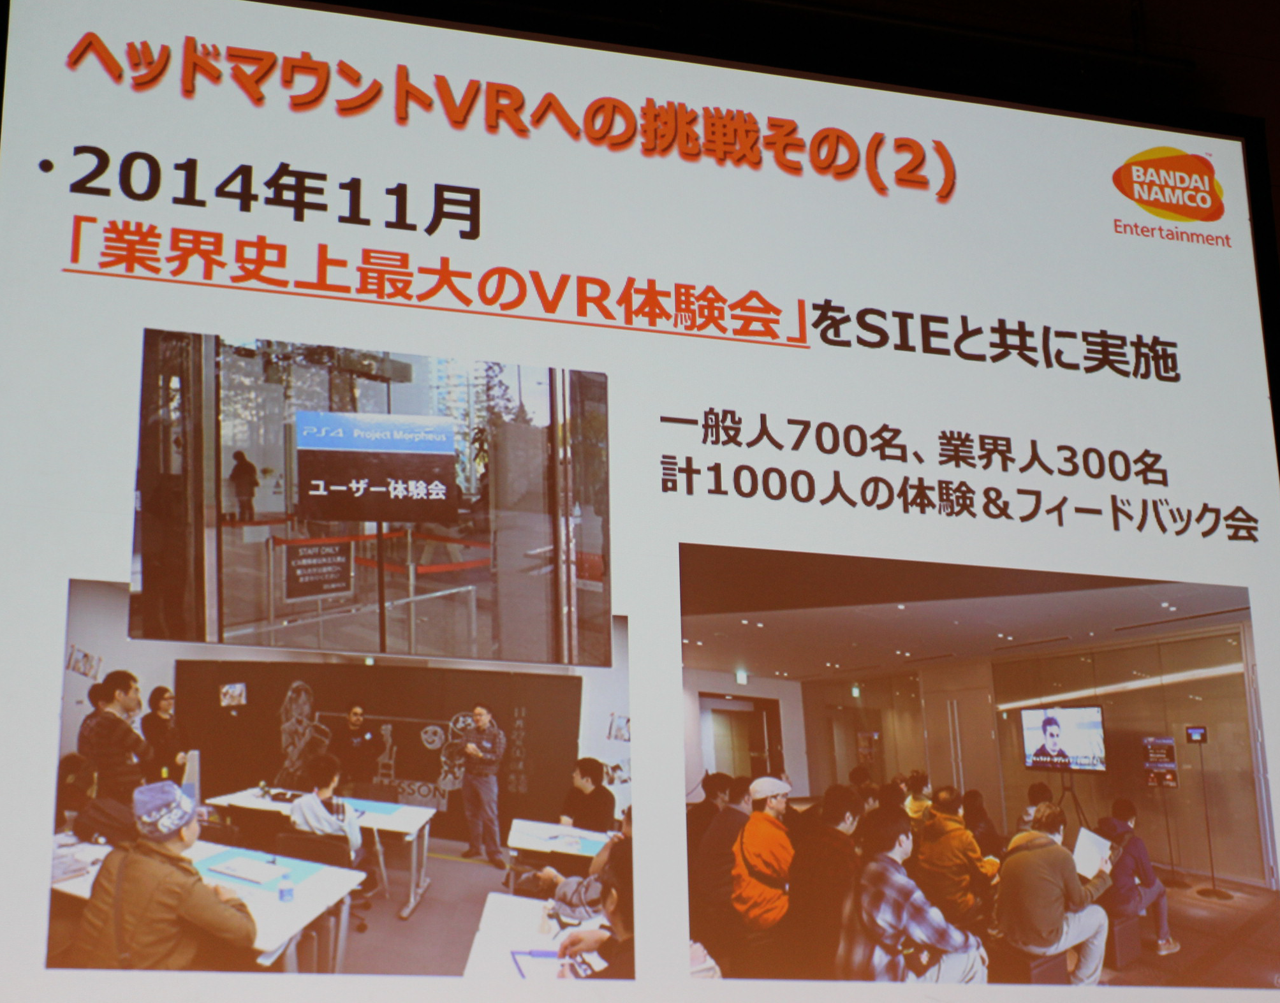 【Japan VR Summit】VRゲーム開発の第一人者が考えるVRゲームの展望